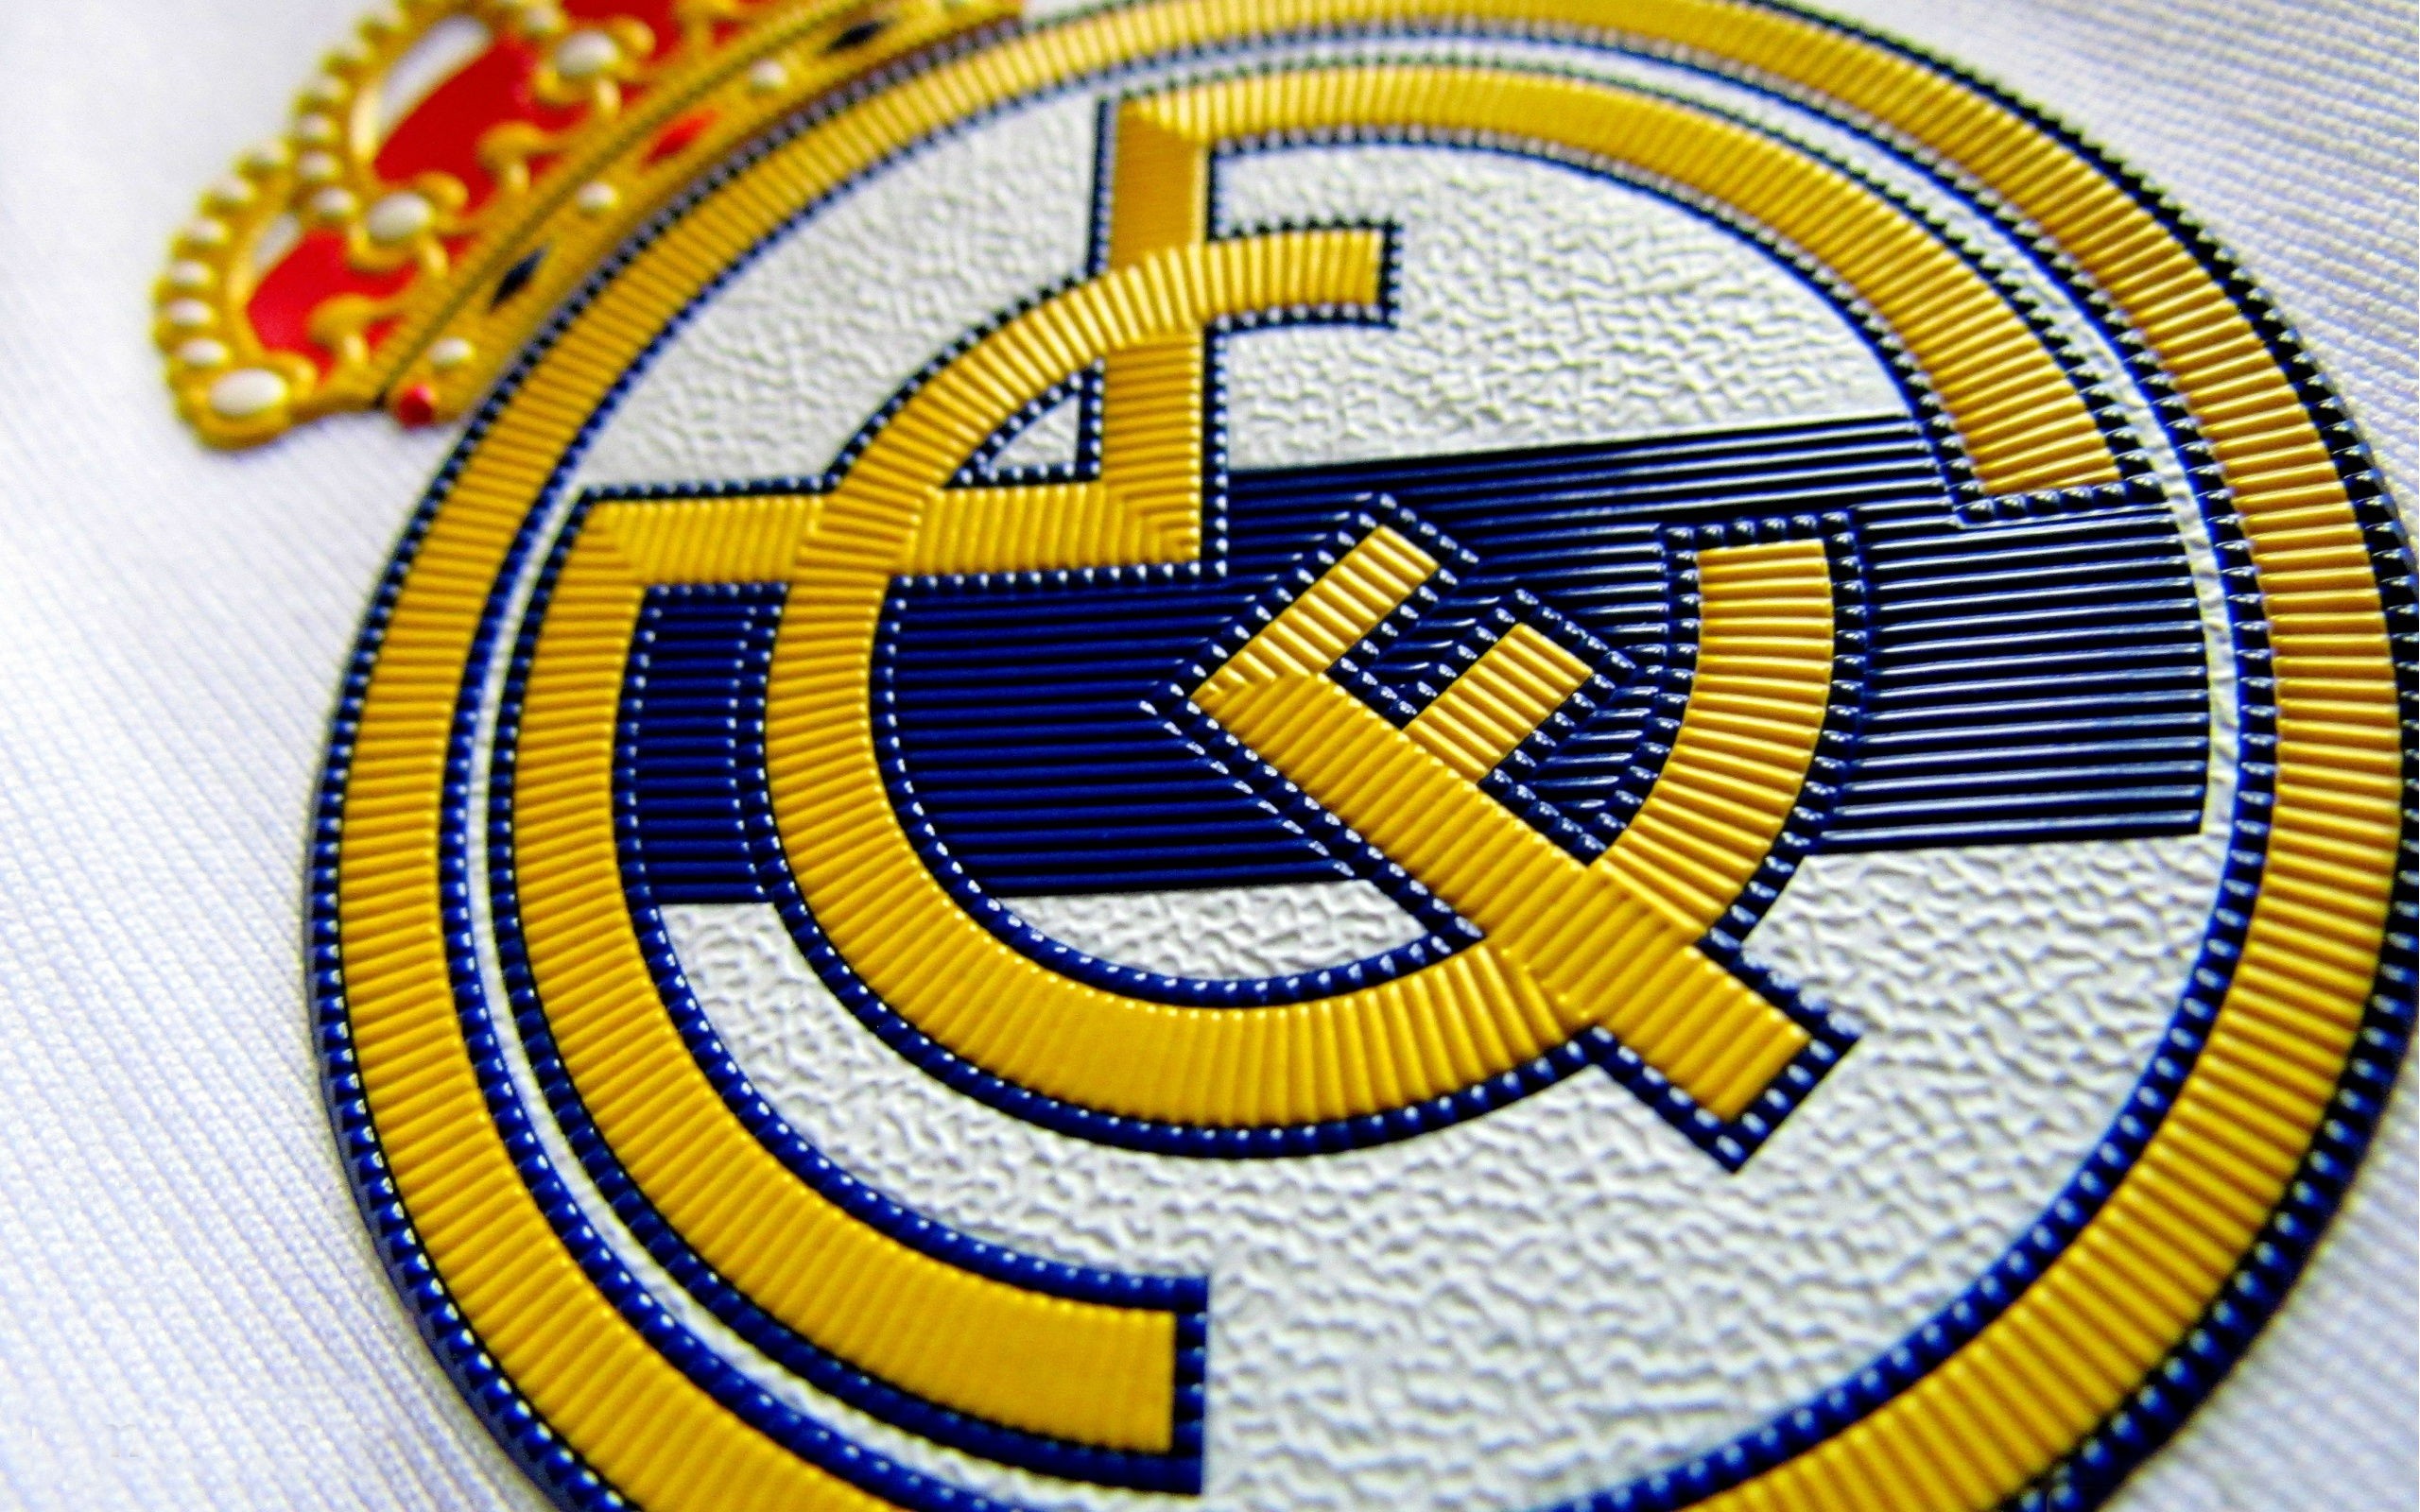 Real Madrid Logo 2016 Football Club Fotolipcom Rich Image And